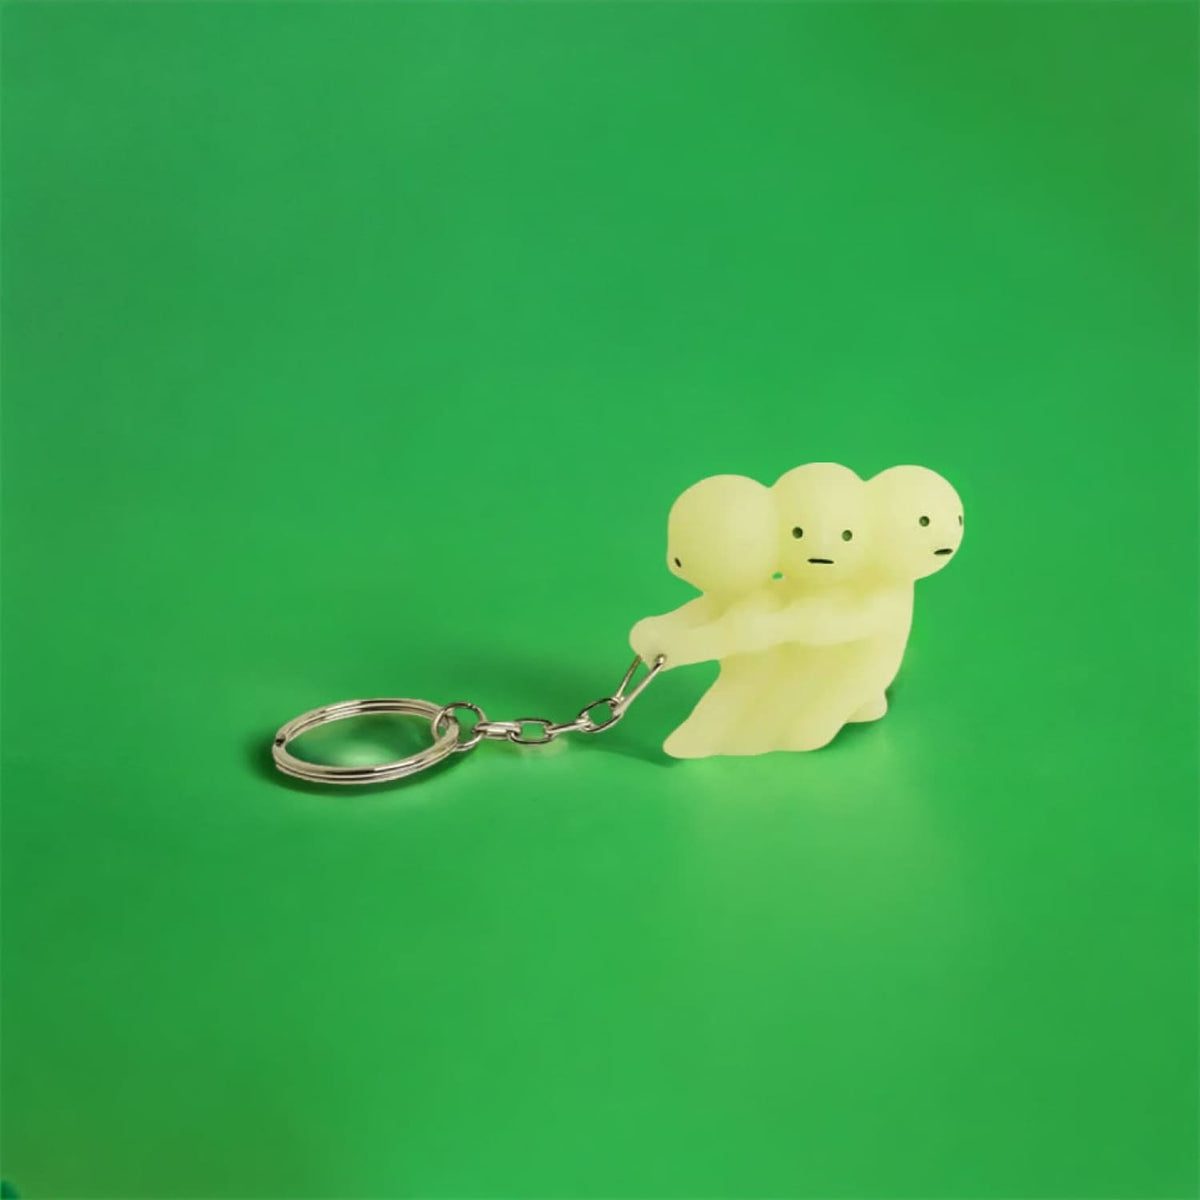 Kawaii Smiski Series Anime Luminous Figure Keychain Japan Creative